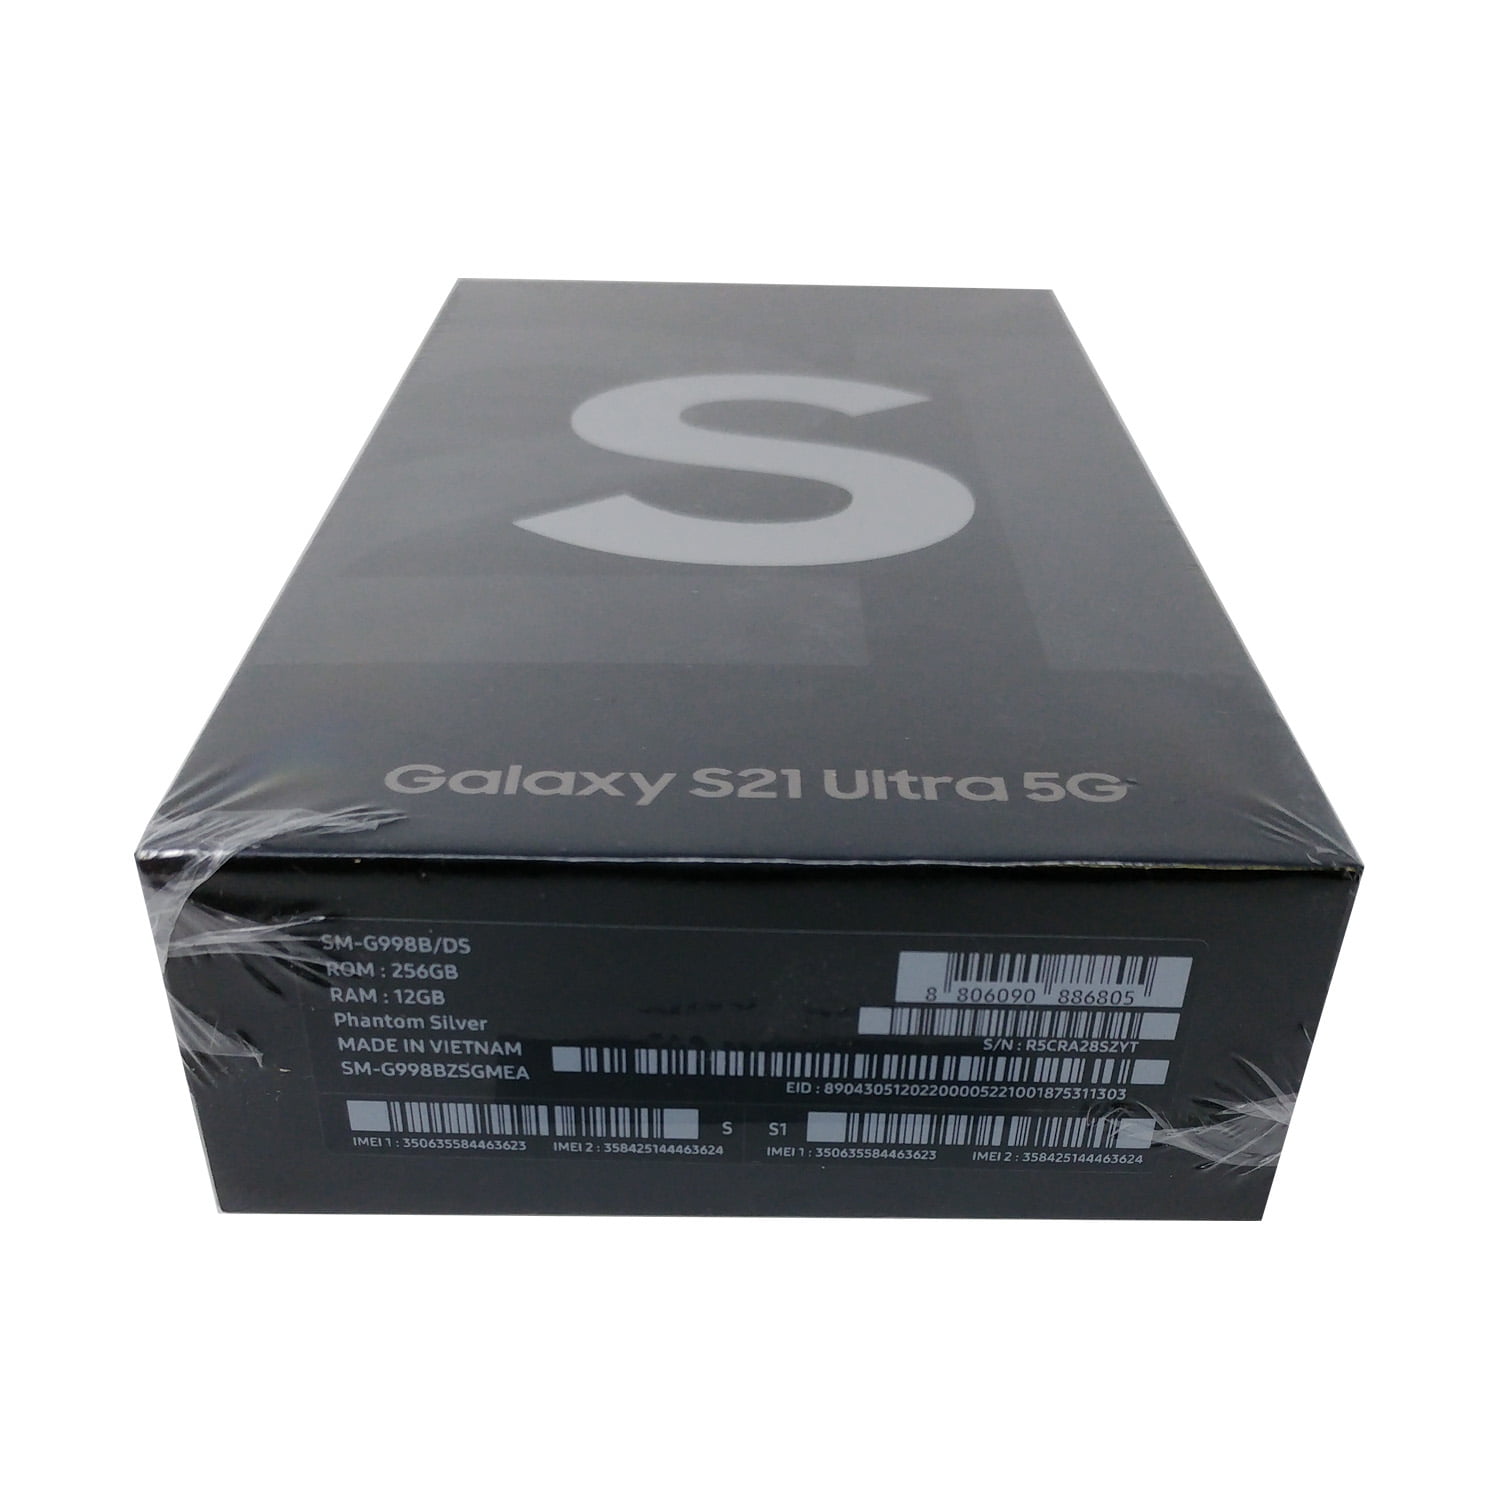  SAMSUNG Galaxy S21 Ultra 5G SM-G998B/DS 512GB 16GB RAM  International Version - Phantom Silver, SM-G998BZSHEUB